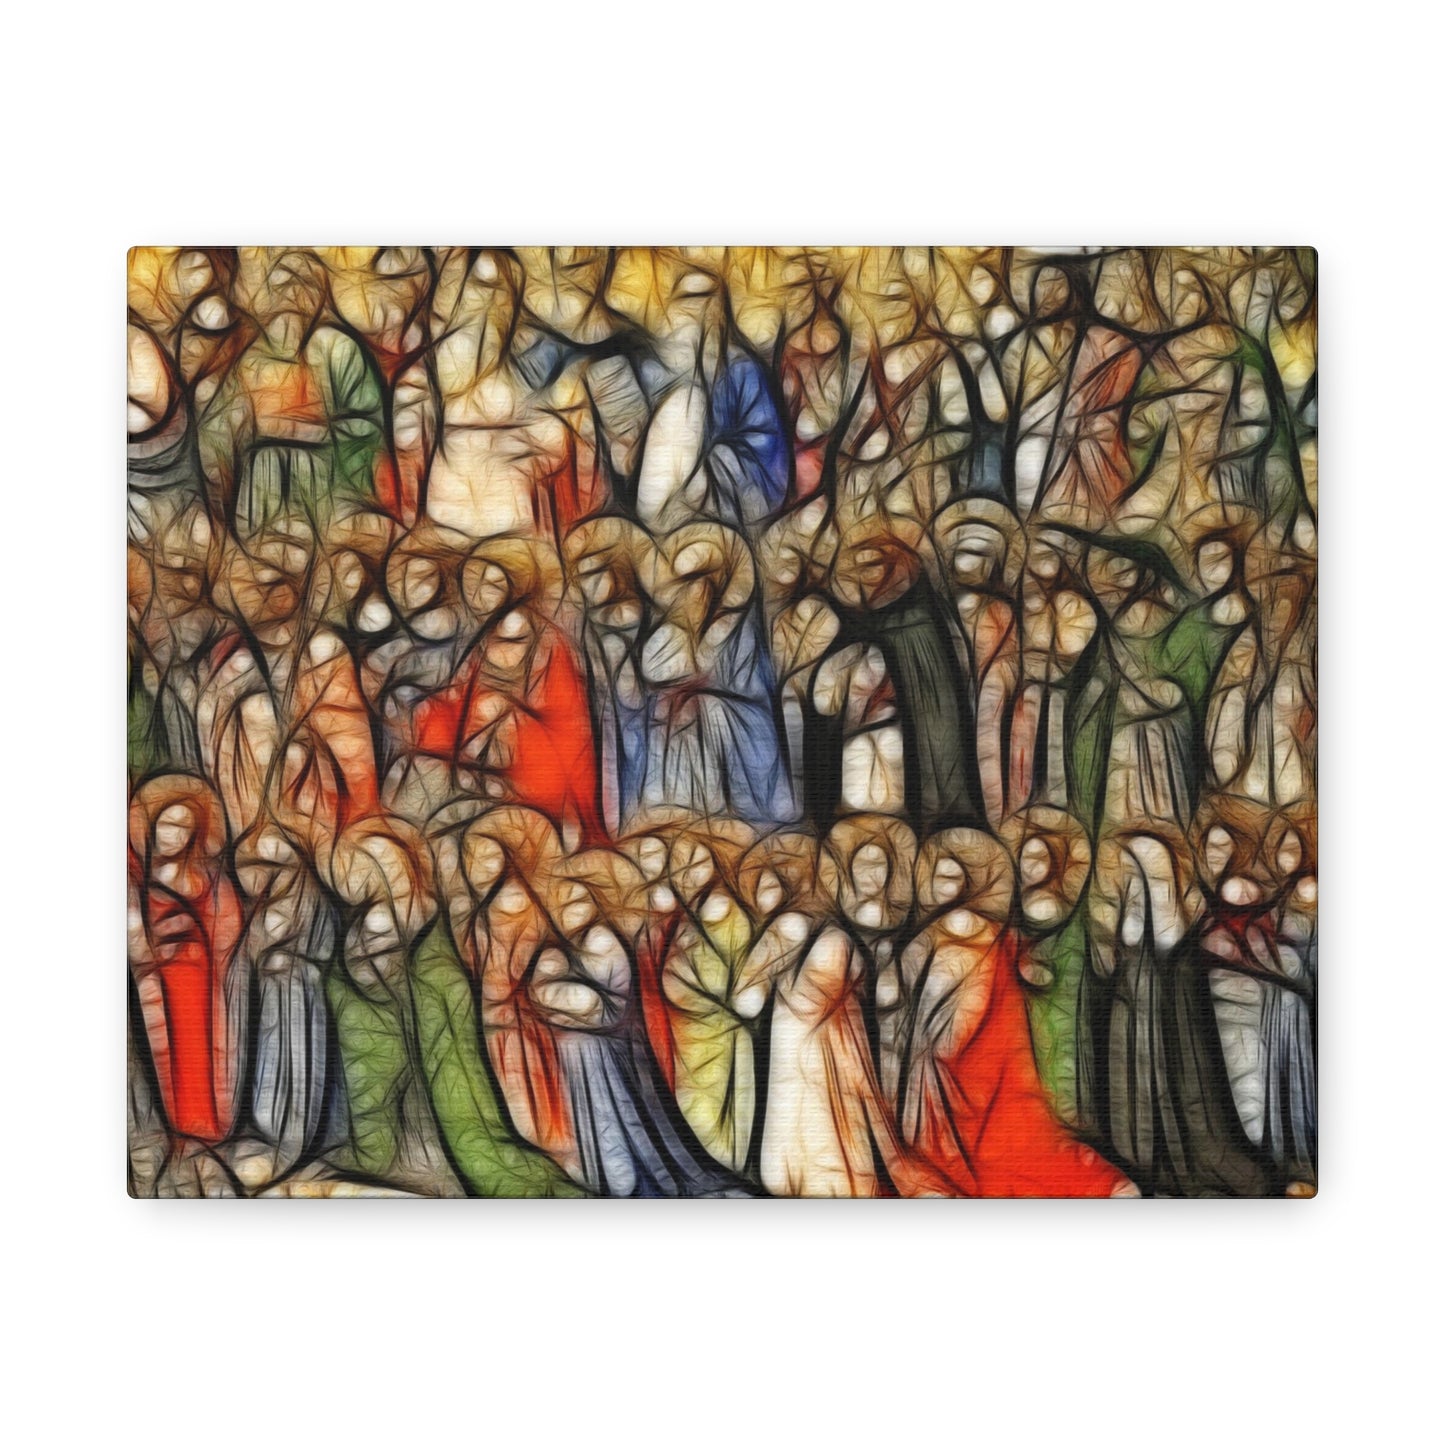 All Saints Day Art in Watercolor Inspiring Canvas Print, Catholic All Saints Canvas Art All Hallows Eve Home Decor, Catholic Devotion